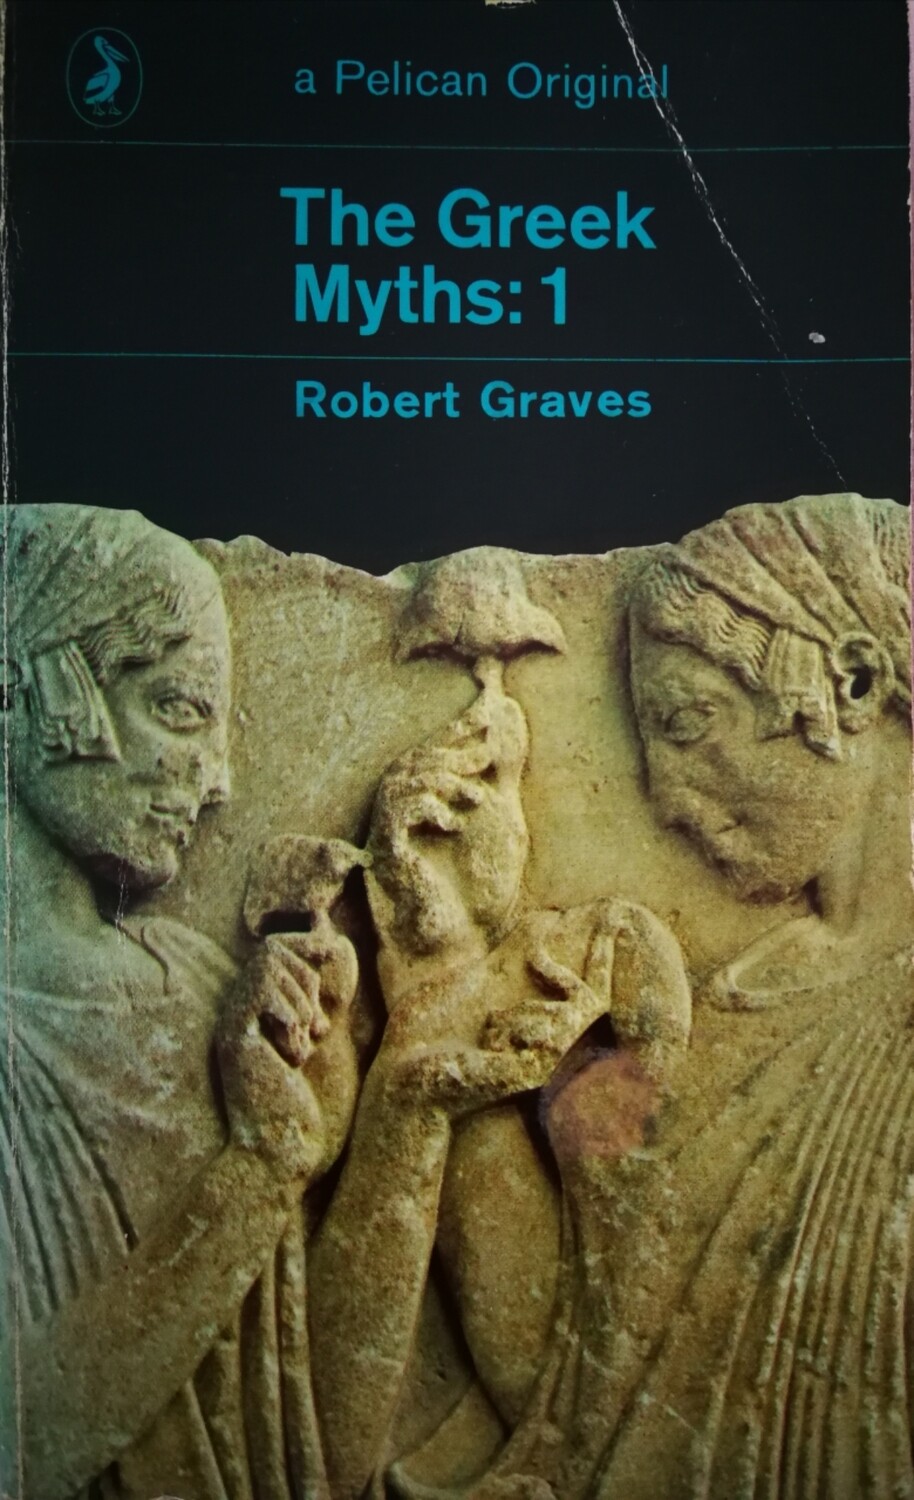 The Greek Myths:1 by Robert Graves